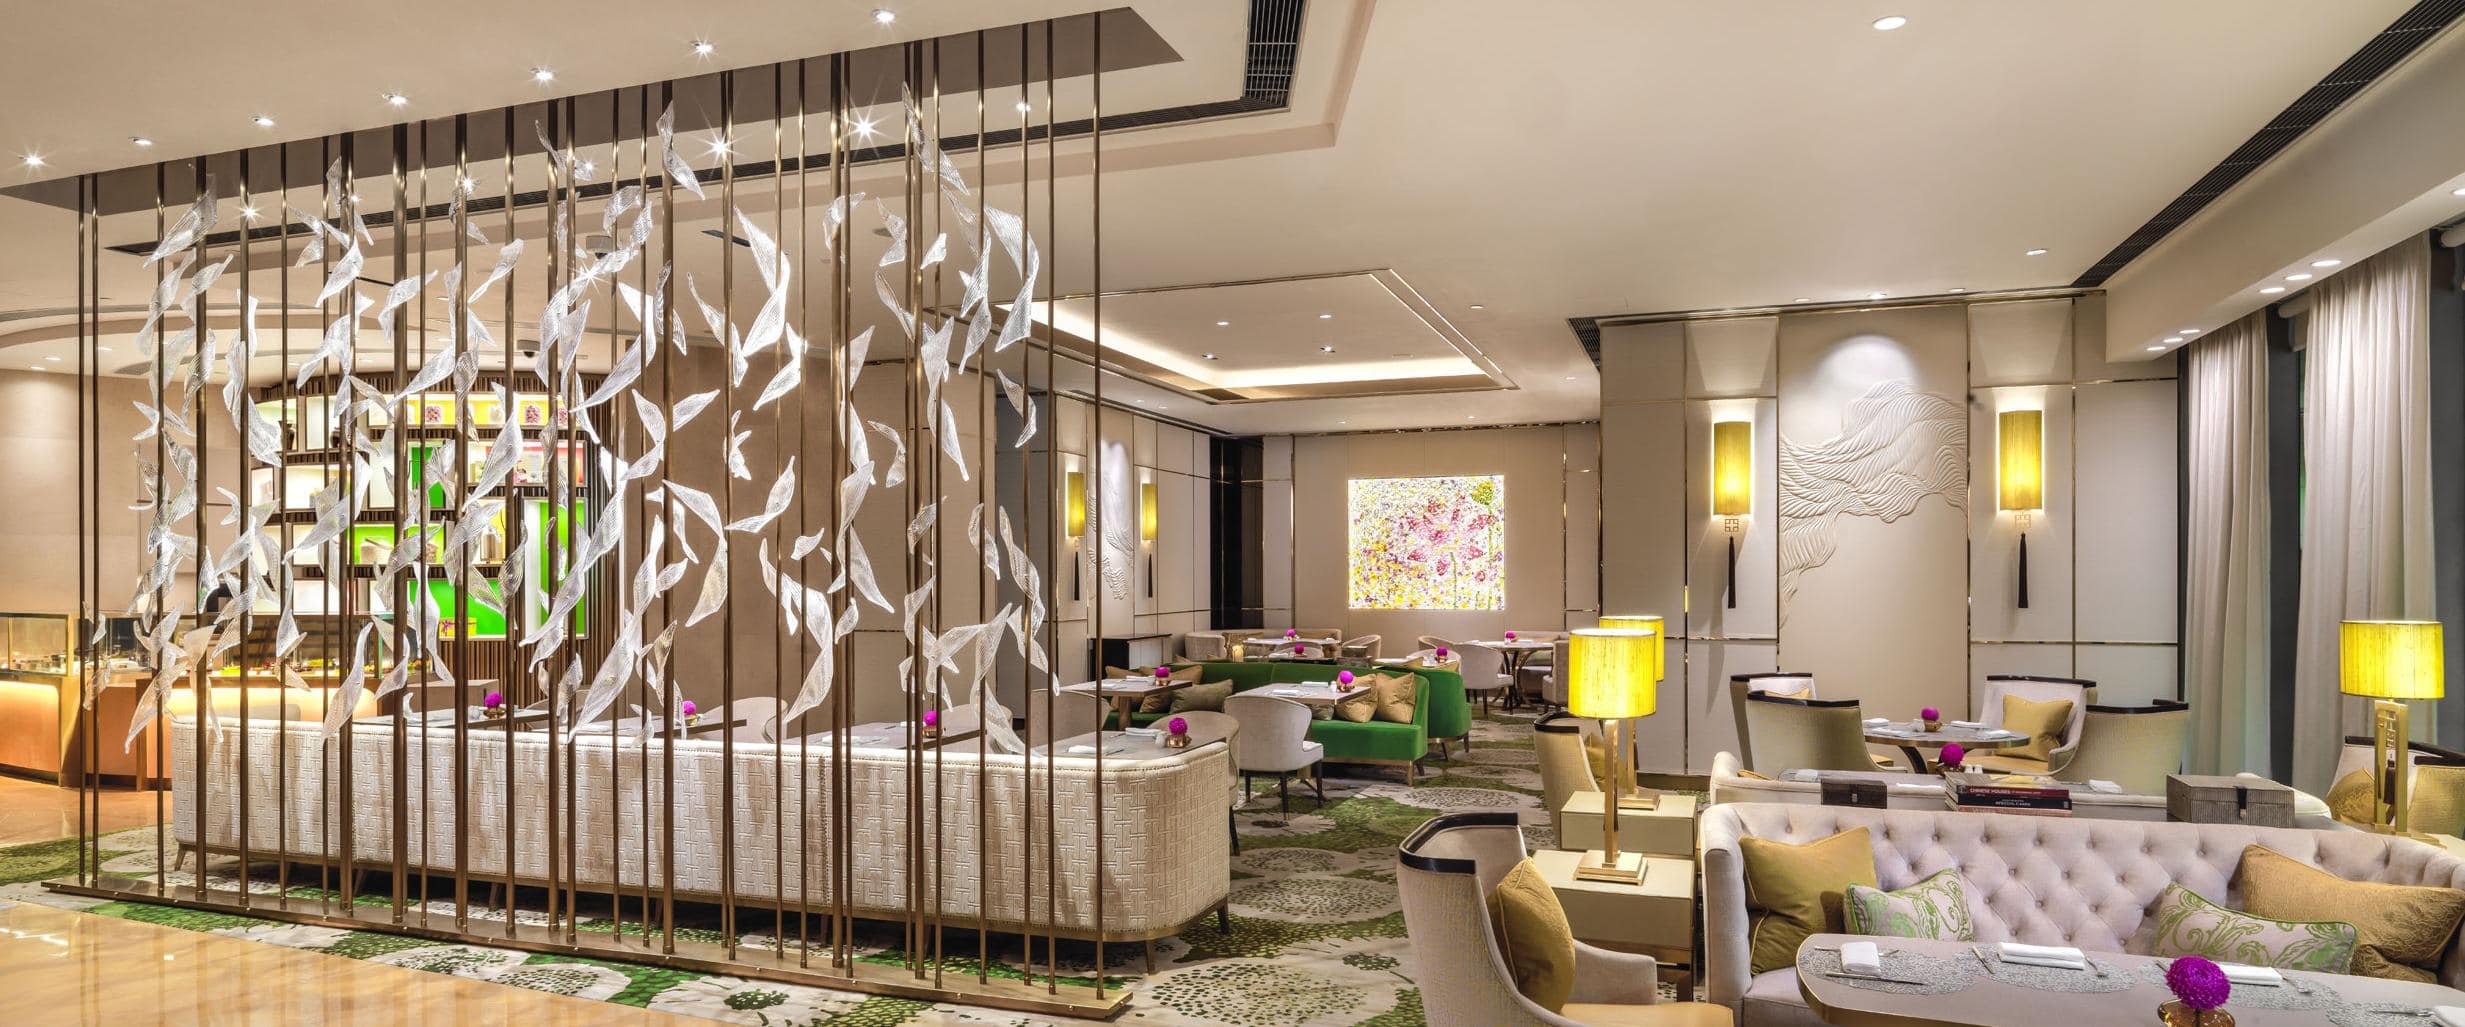 Lobby Lounge | Mandarin Oriental Hotel, Macau2465 x 1027